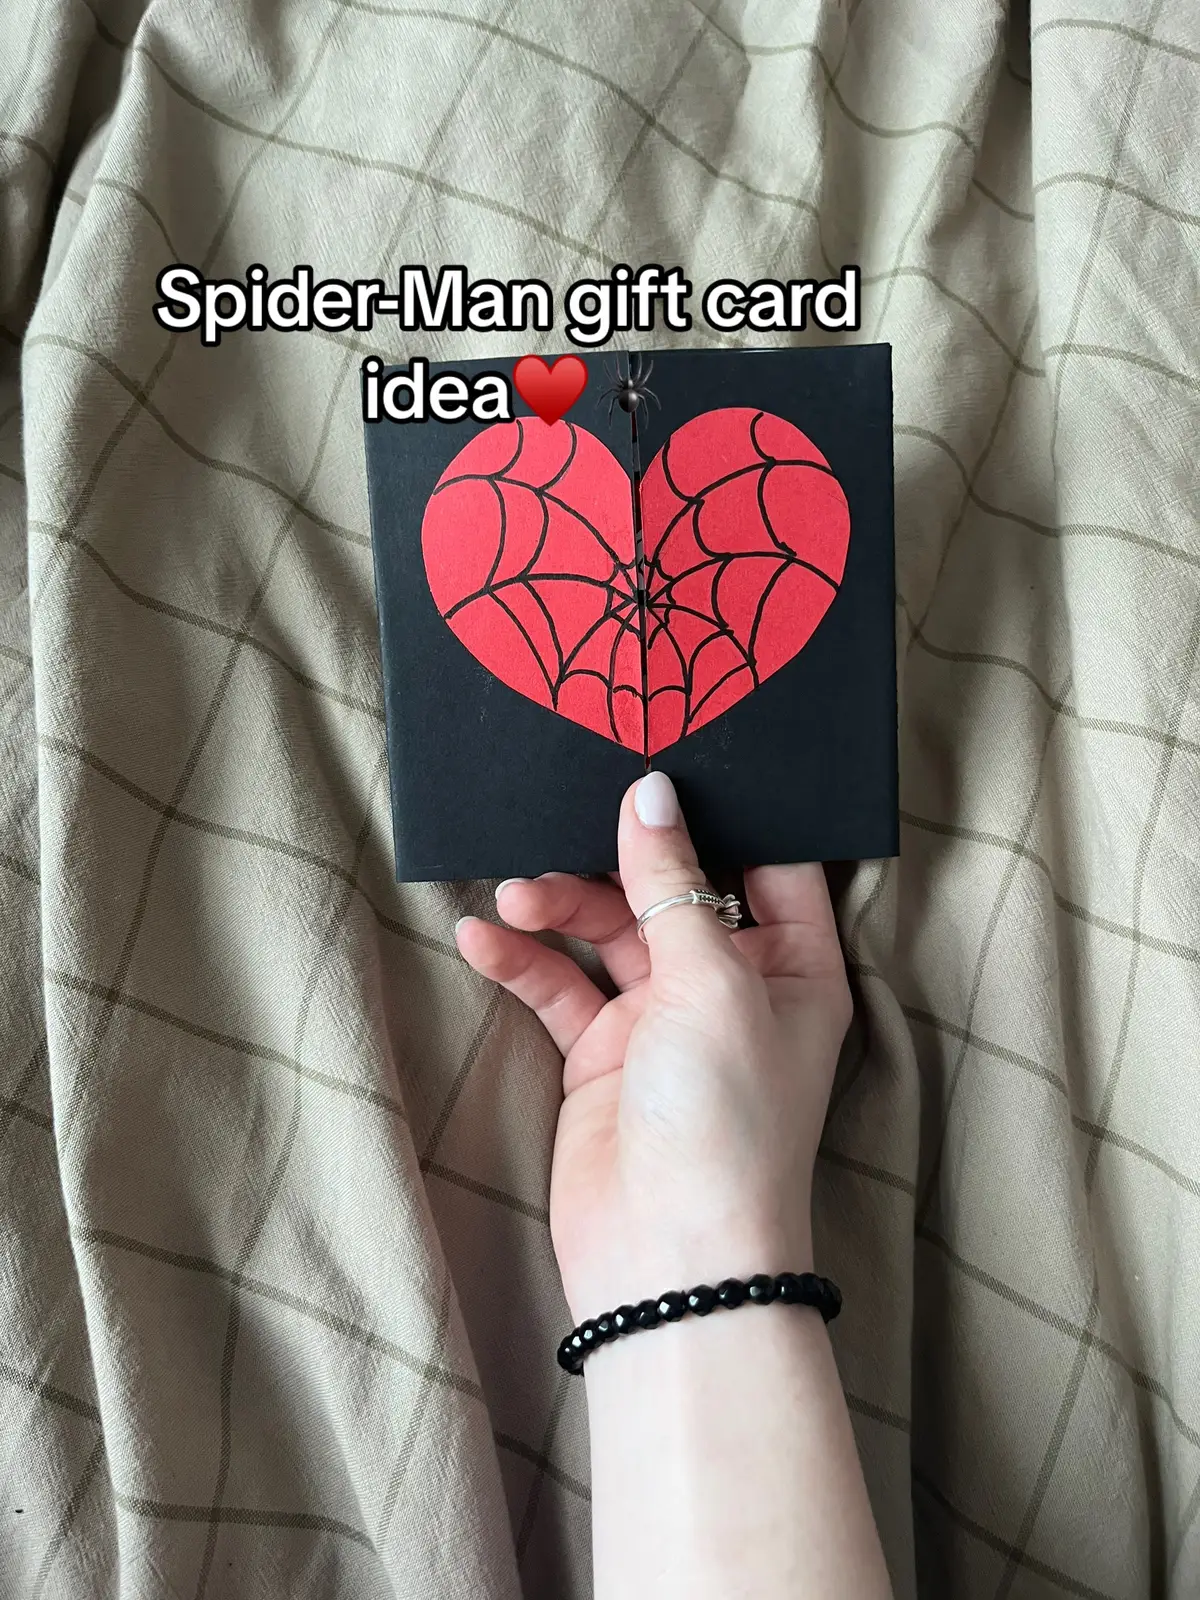 Spiderman giftcard idea♥️🕷️👀#him #Love #LoveIsLove #art #foryou #furdich #viral #lovestory #gift #DIY #loveletter #papercrafts #handmadegifts #giftidea #handmade #giftcards 